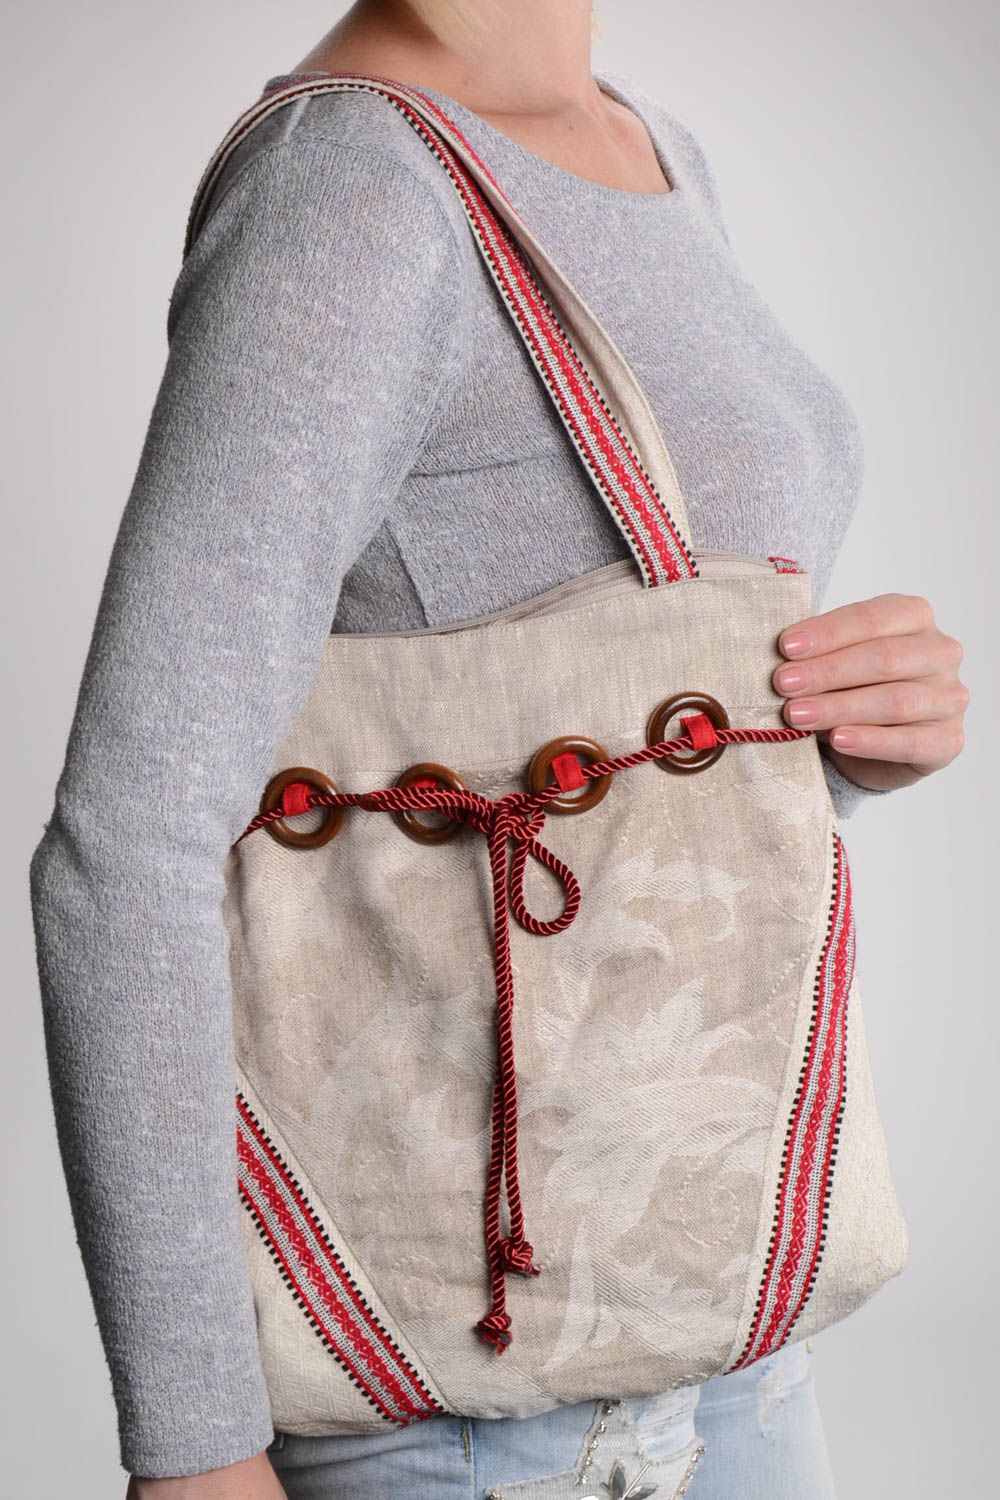 Handmade bag designer bag summer bag gift ideas bag for women fabric bag photo 1